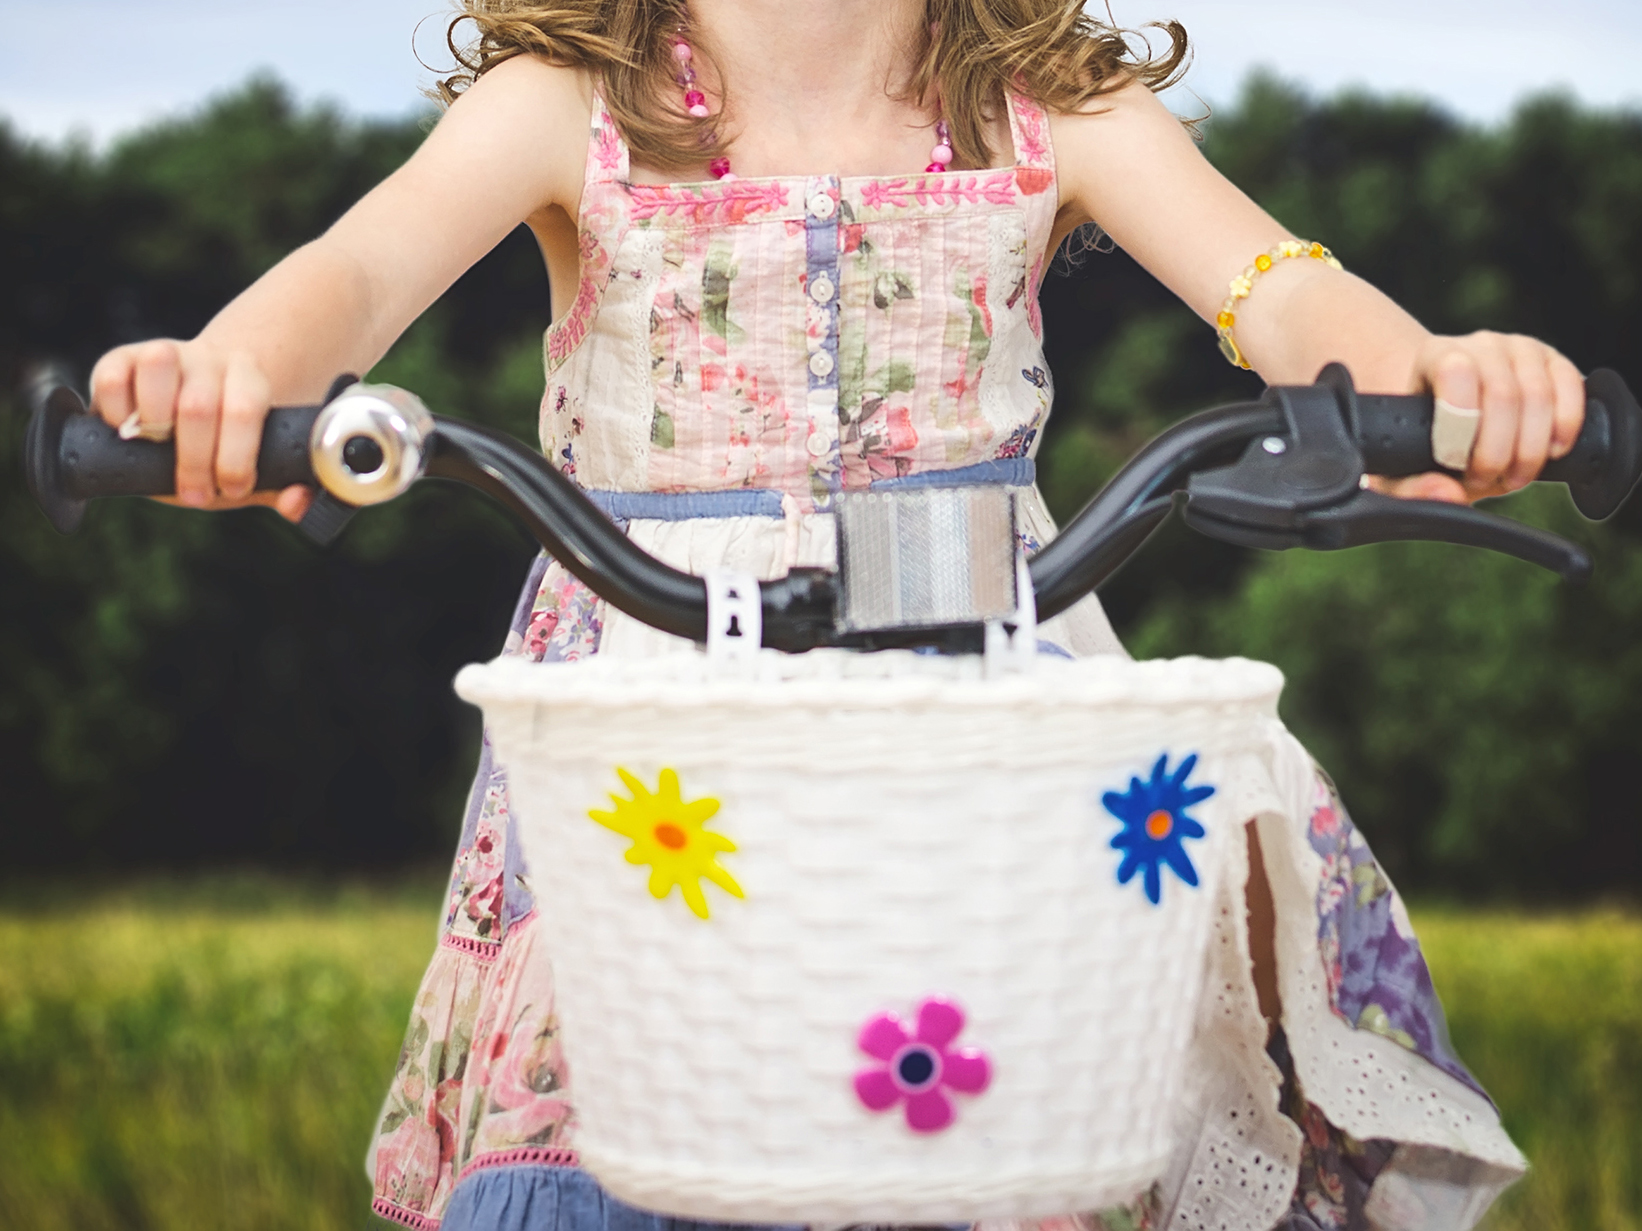 Girl on a bike with a wicker basket